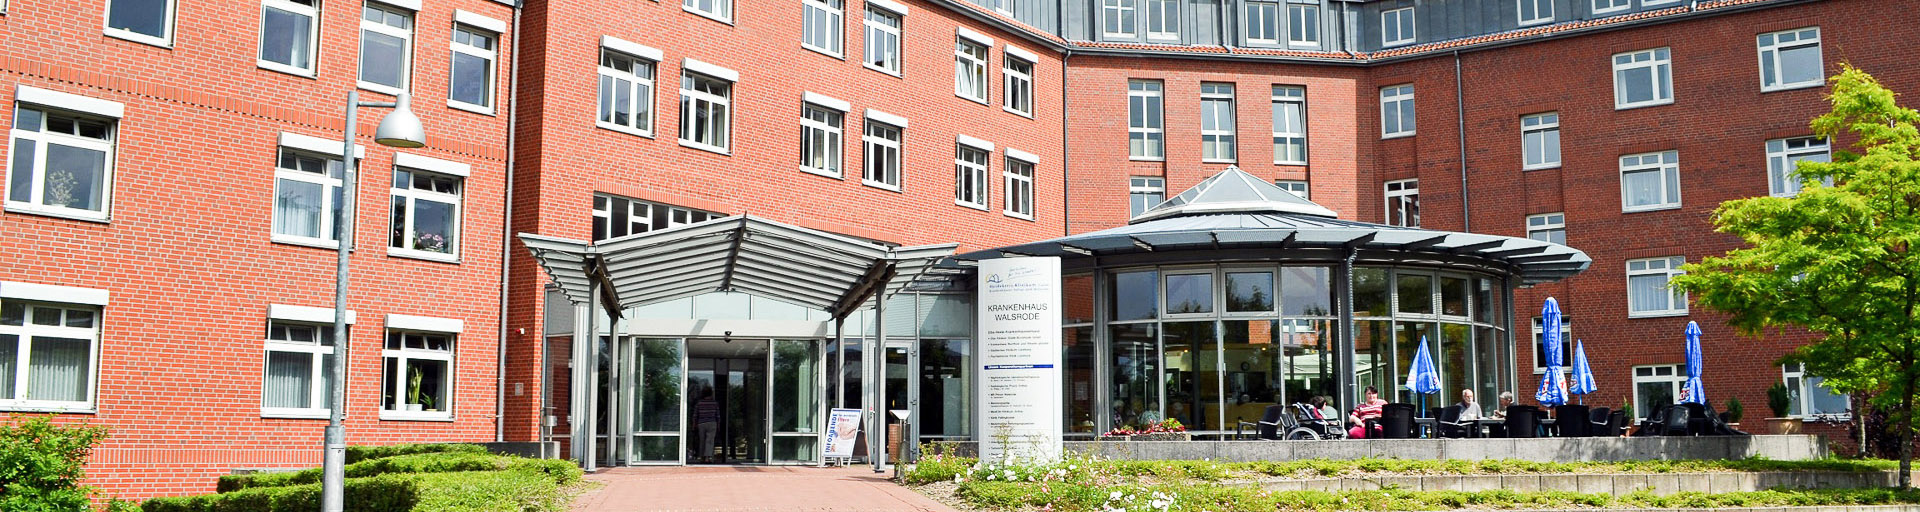 Haupteingang des Heidekreis-Klinikums in Walsrode